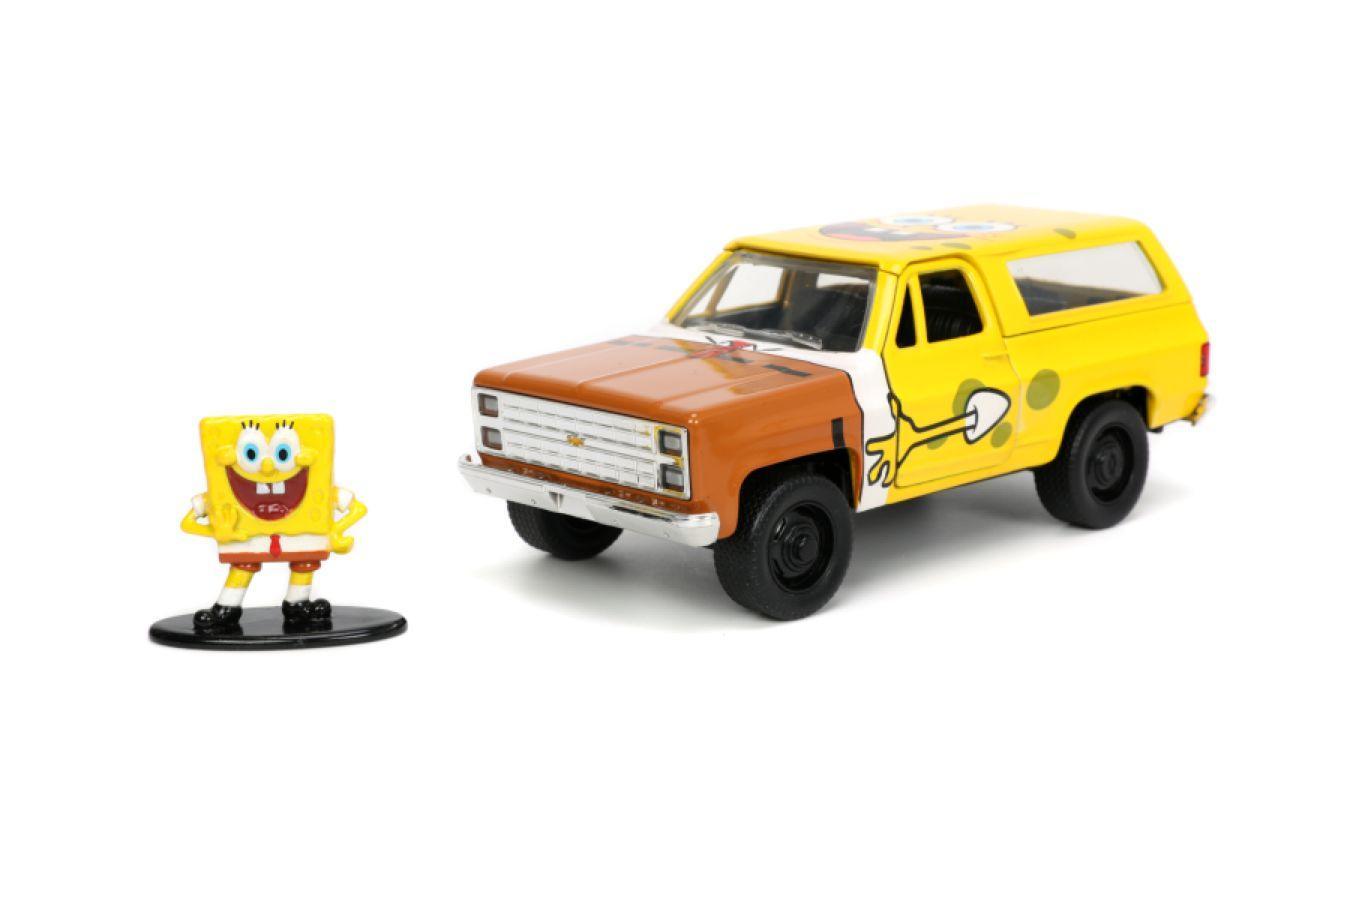 JAD31798 SpongeBob SquarePants - 1980 Chevy K5 Blazer with SpongeBob 1:32 Scale Hollywood Ride - Jada Toys - Titan Pop Culture